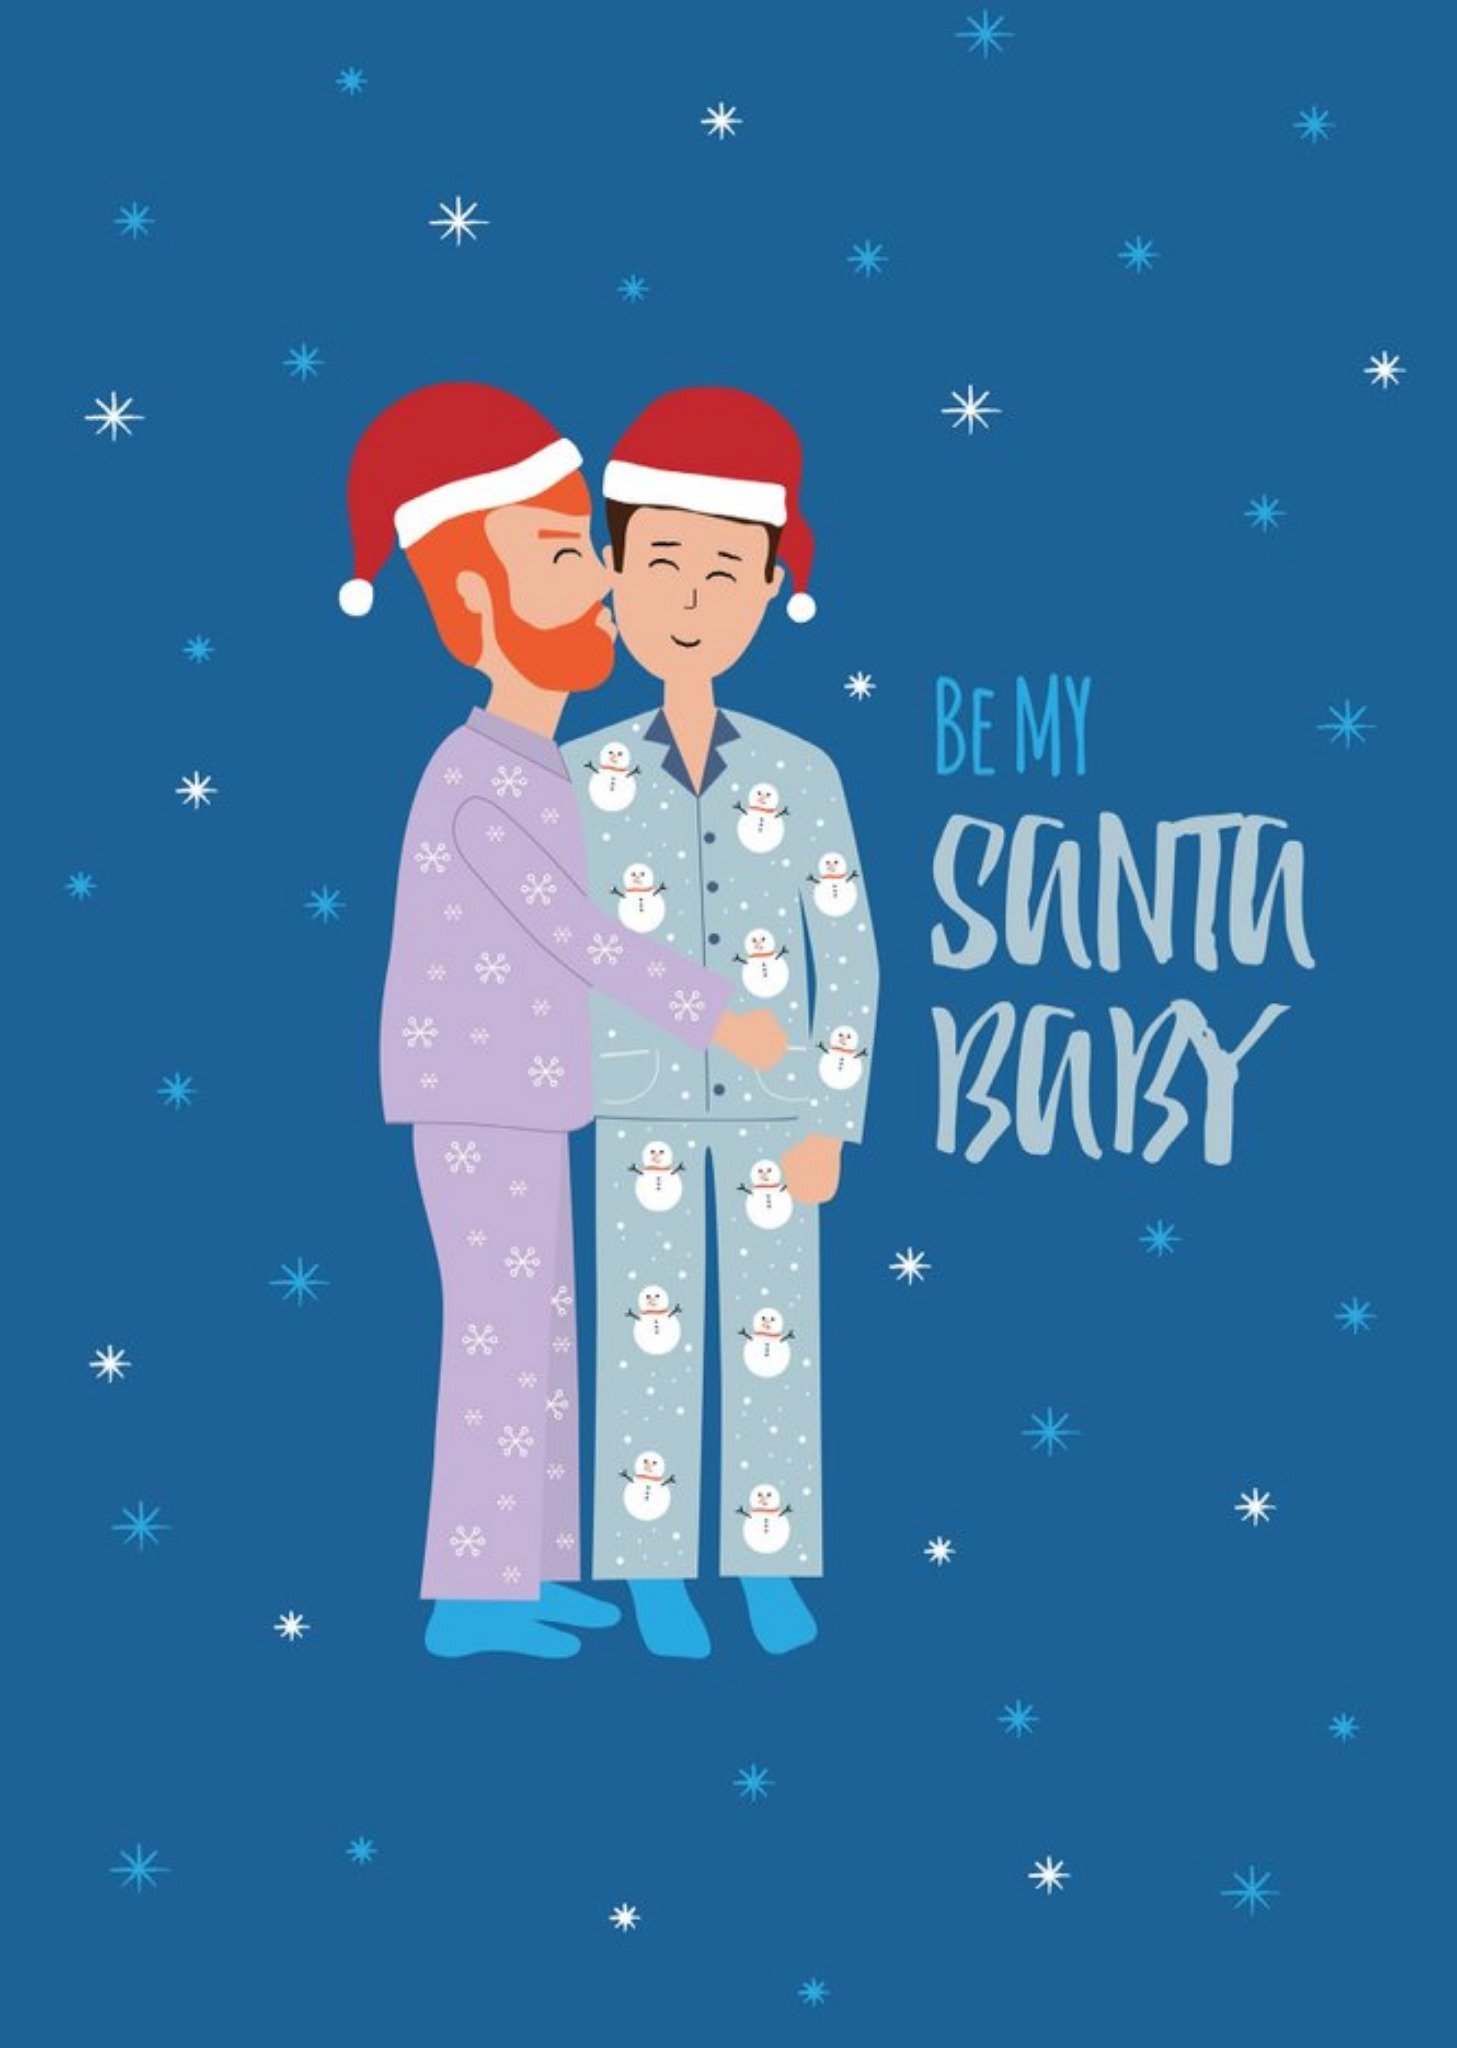 Moonpig Huetribe Two Men Be My Santa Baby Christmas Card Ecard